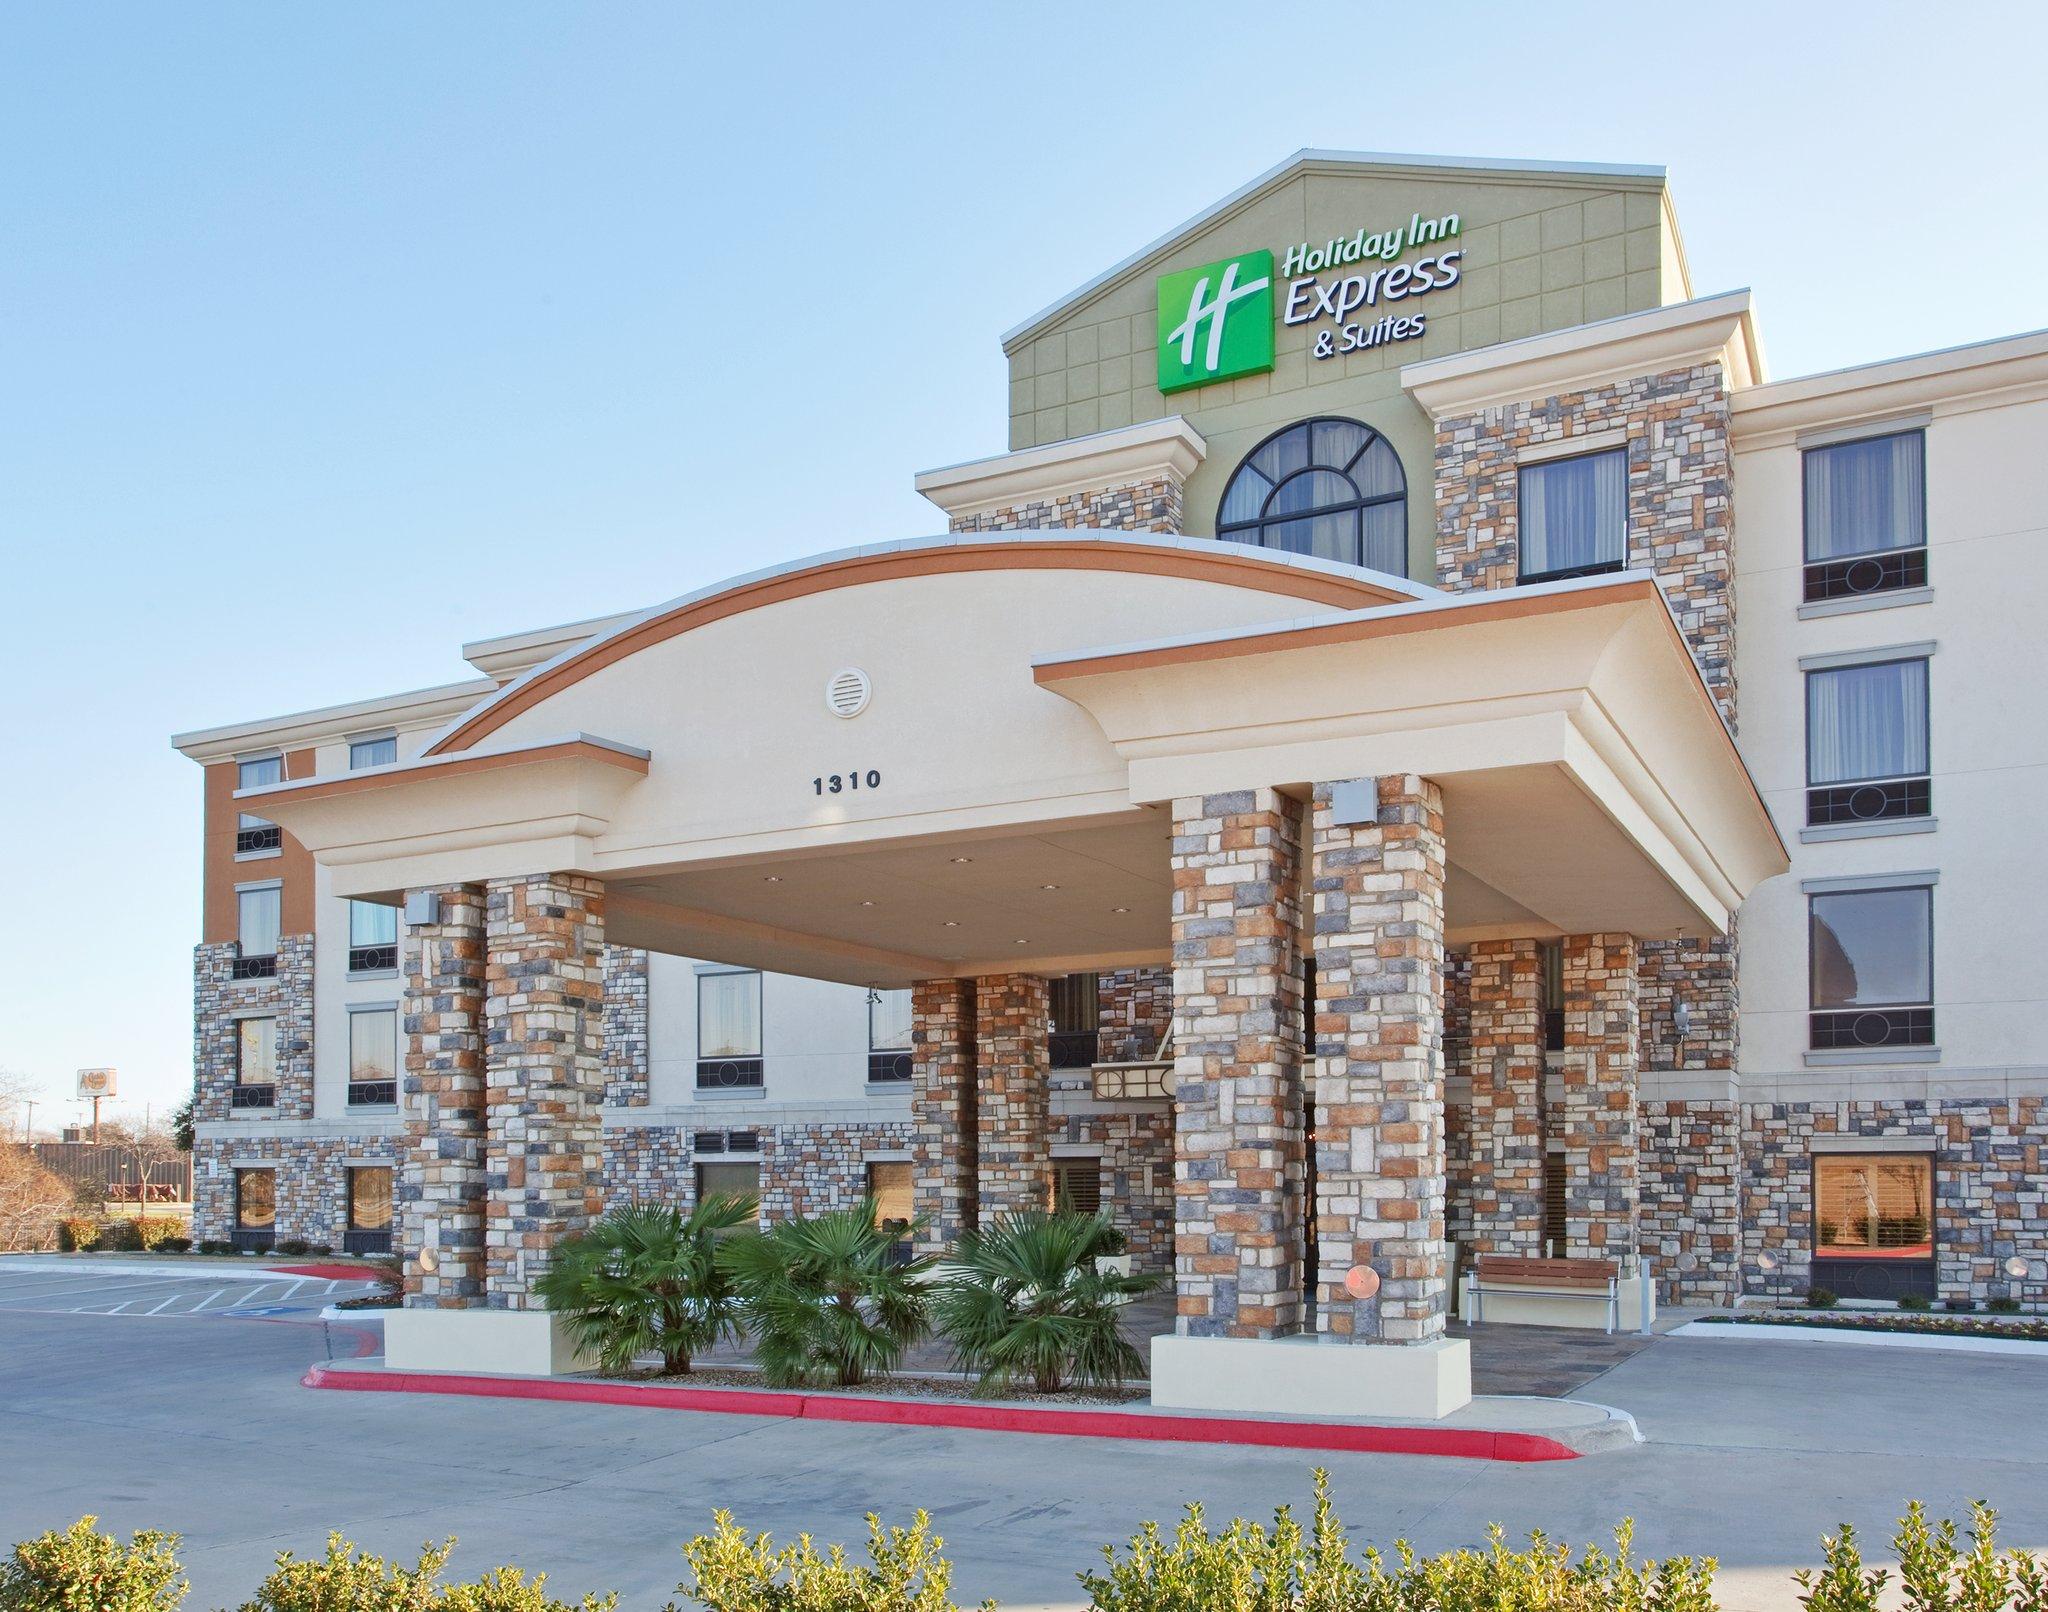 Holiday Inn Express & Suites Dallas South - Desoto in DeSoto, TX